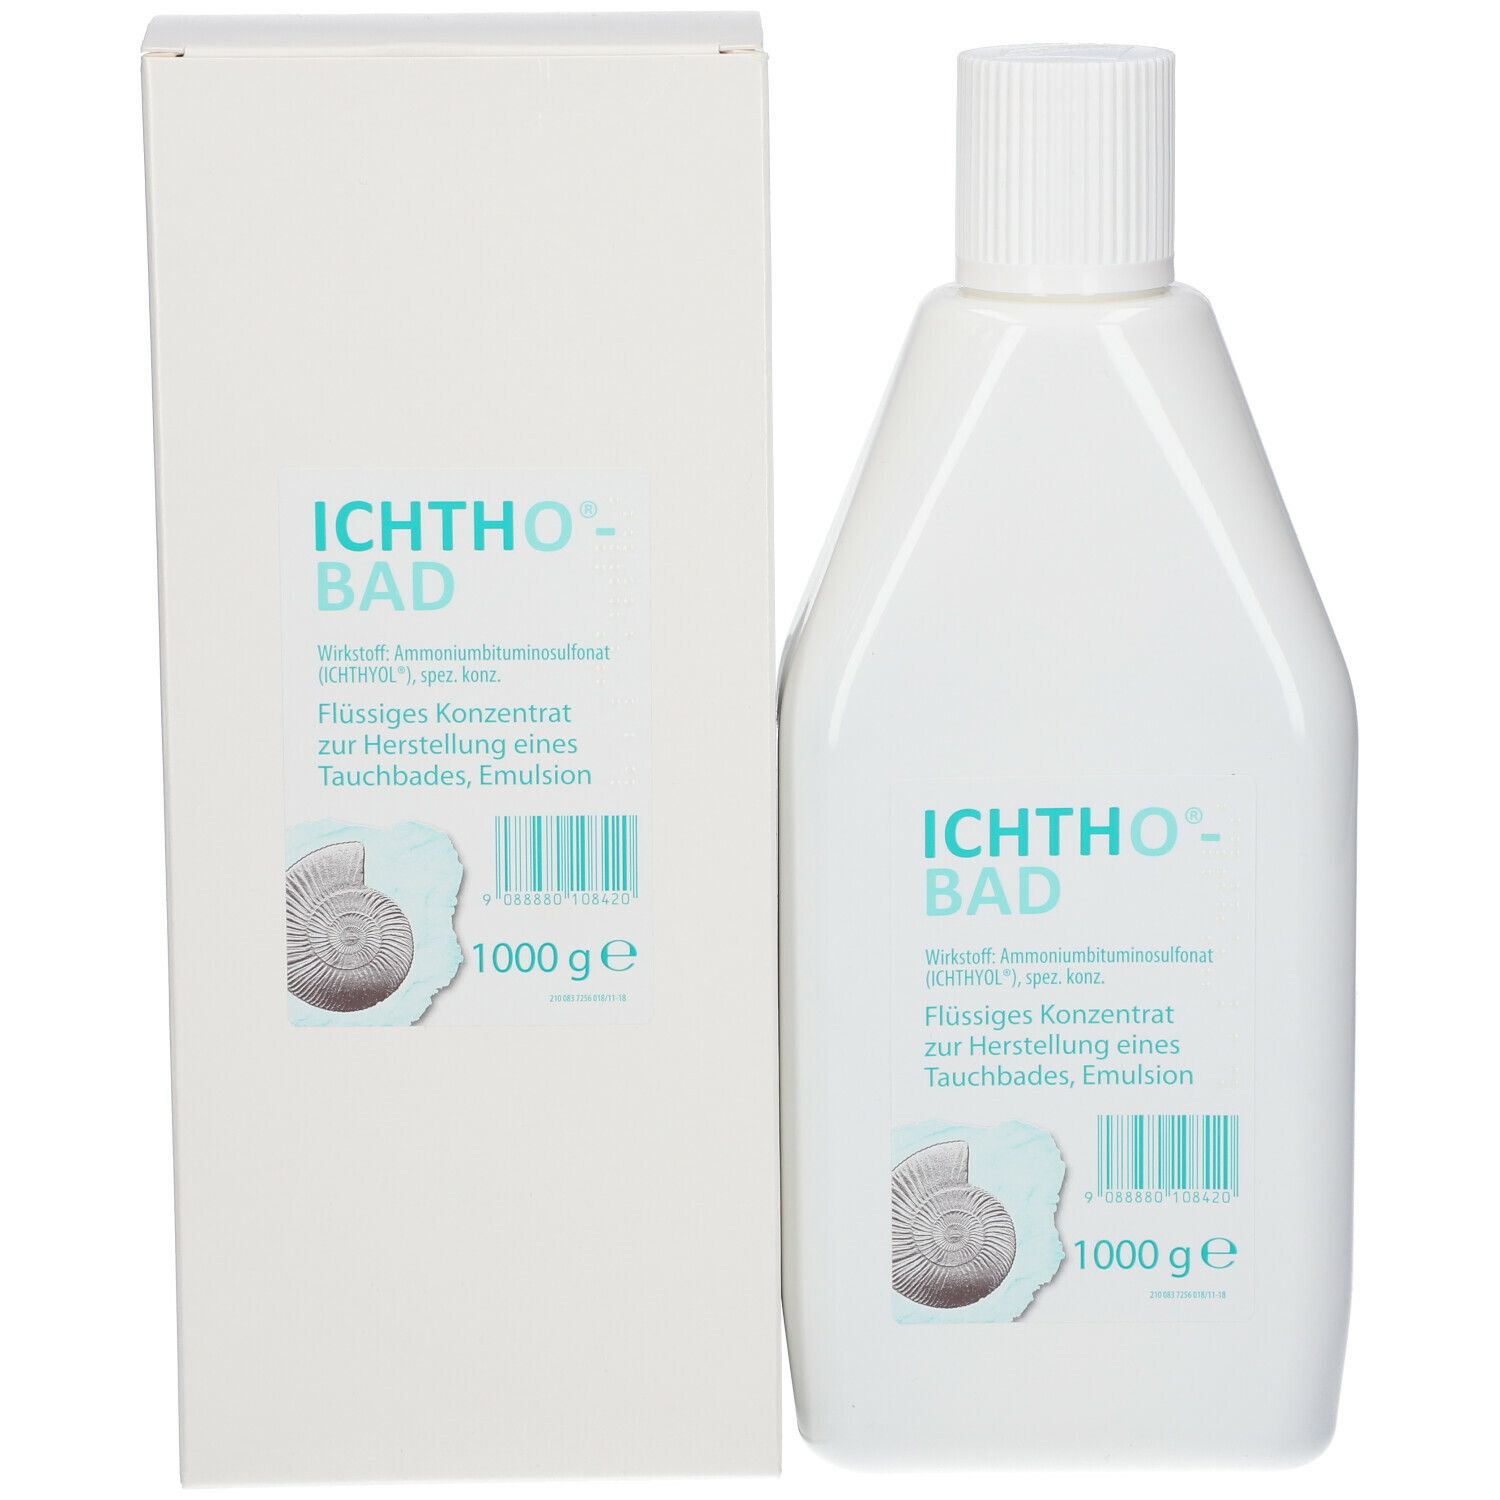 Ichtho®-Bad